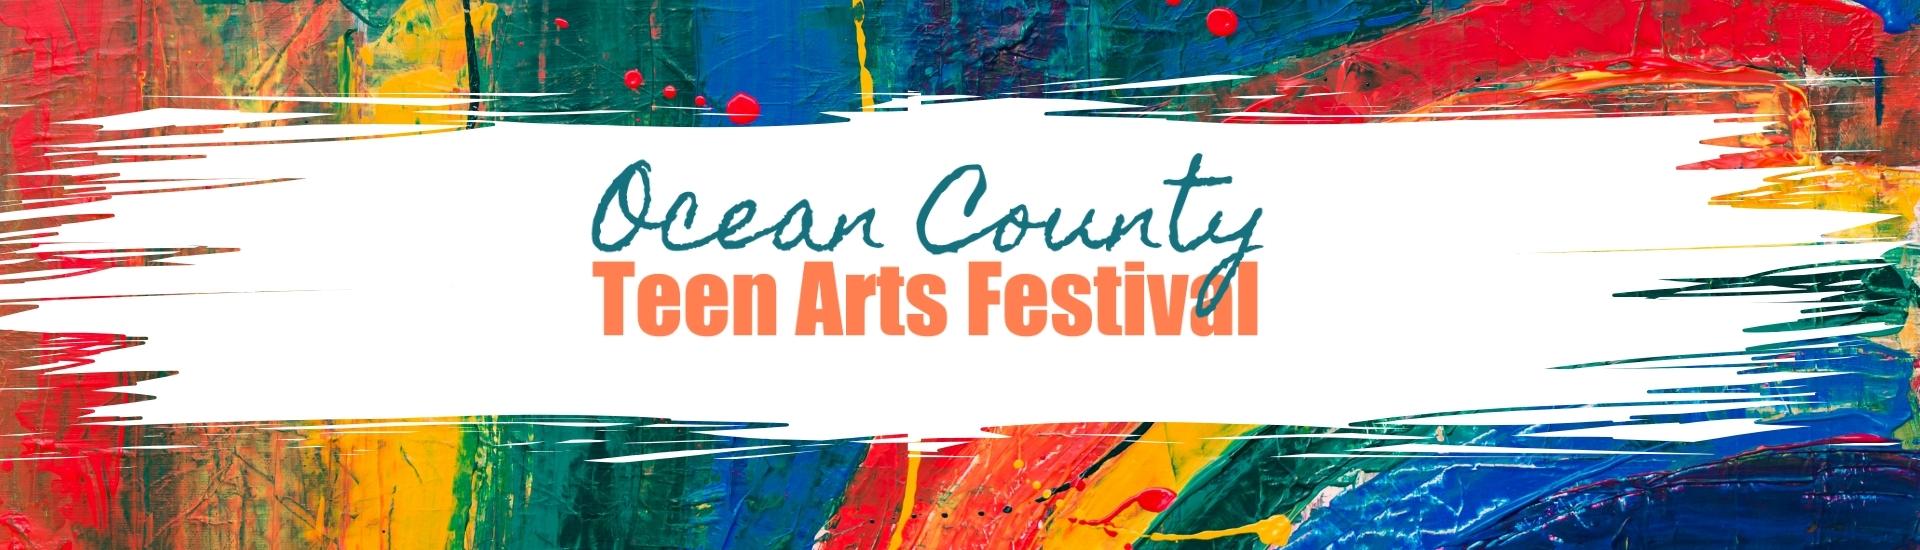 Ocean County Teen Arts Festival